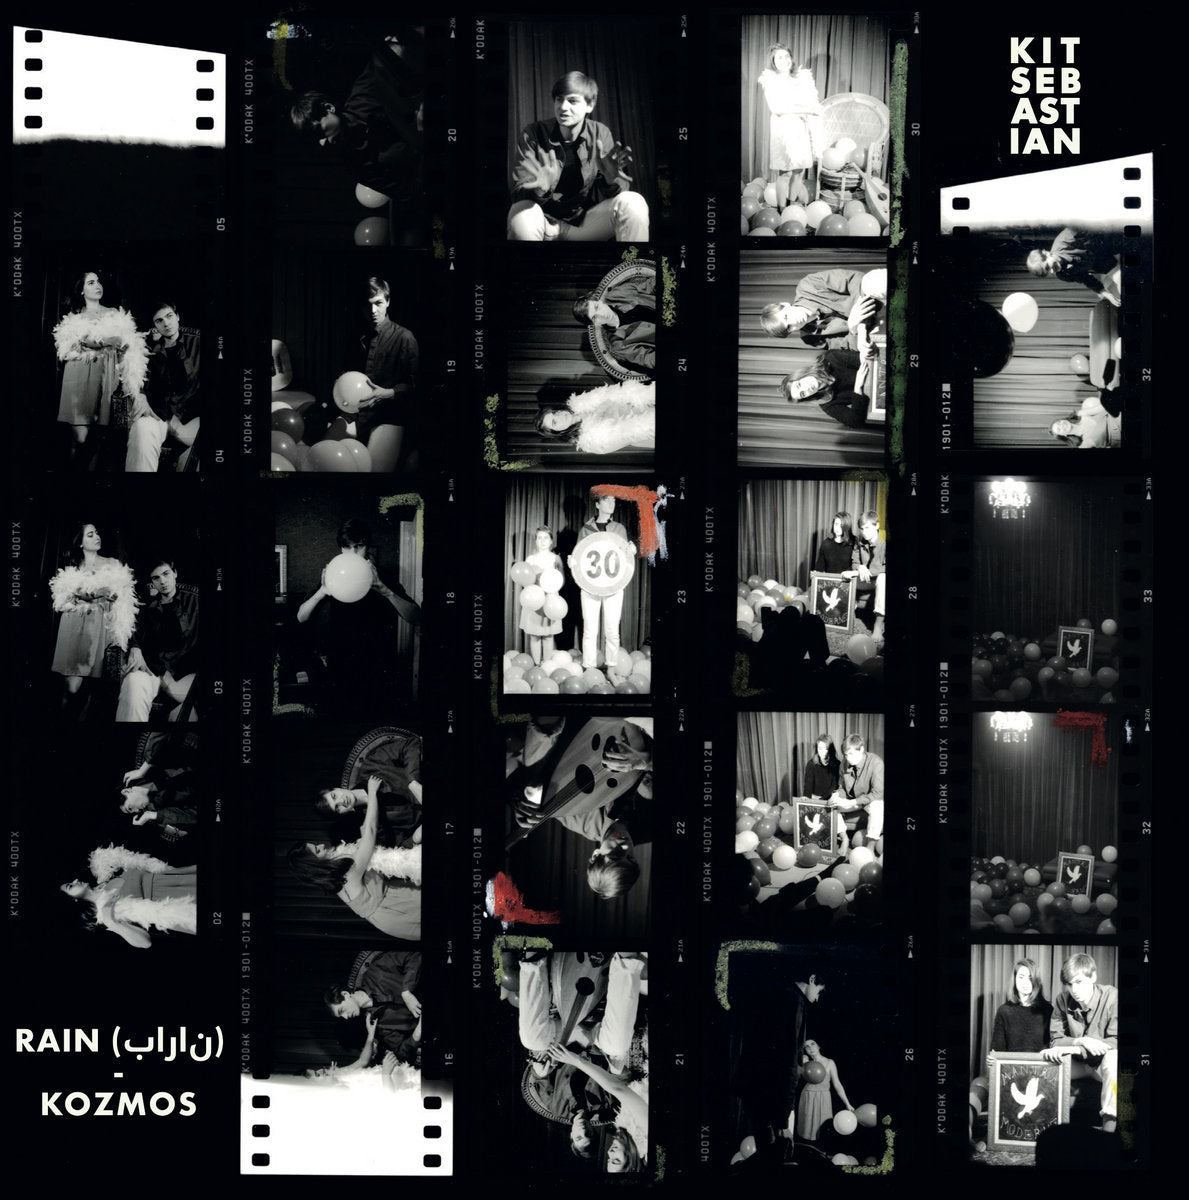 KIT SEBASTIAN - Rain/Kozmos - 7" - Vinyl